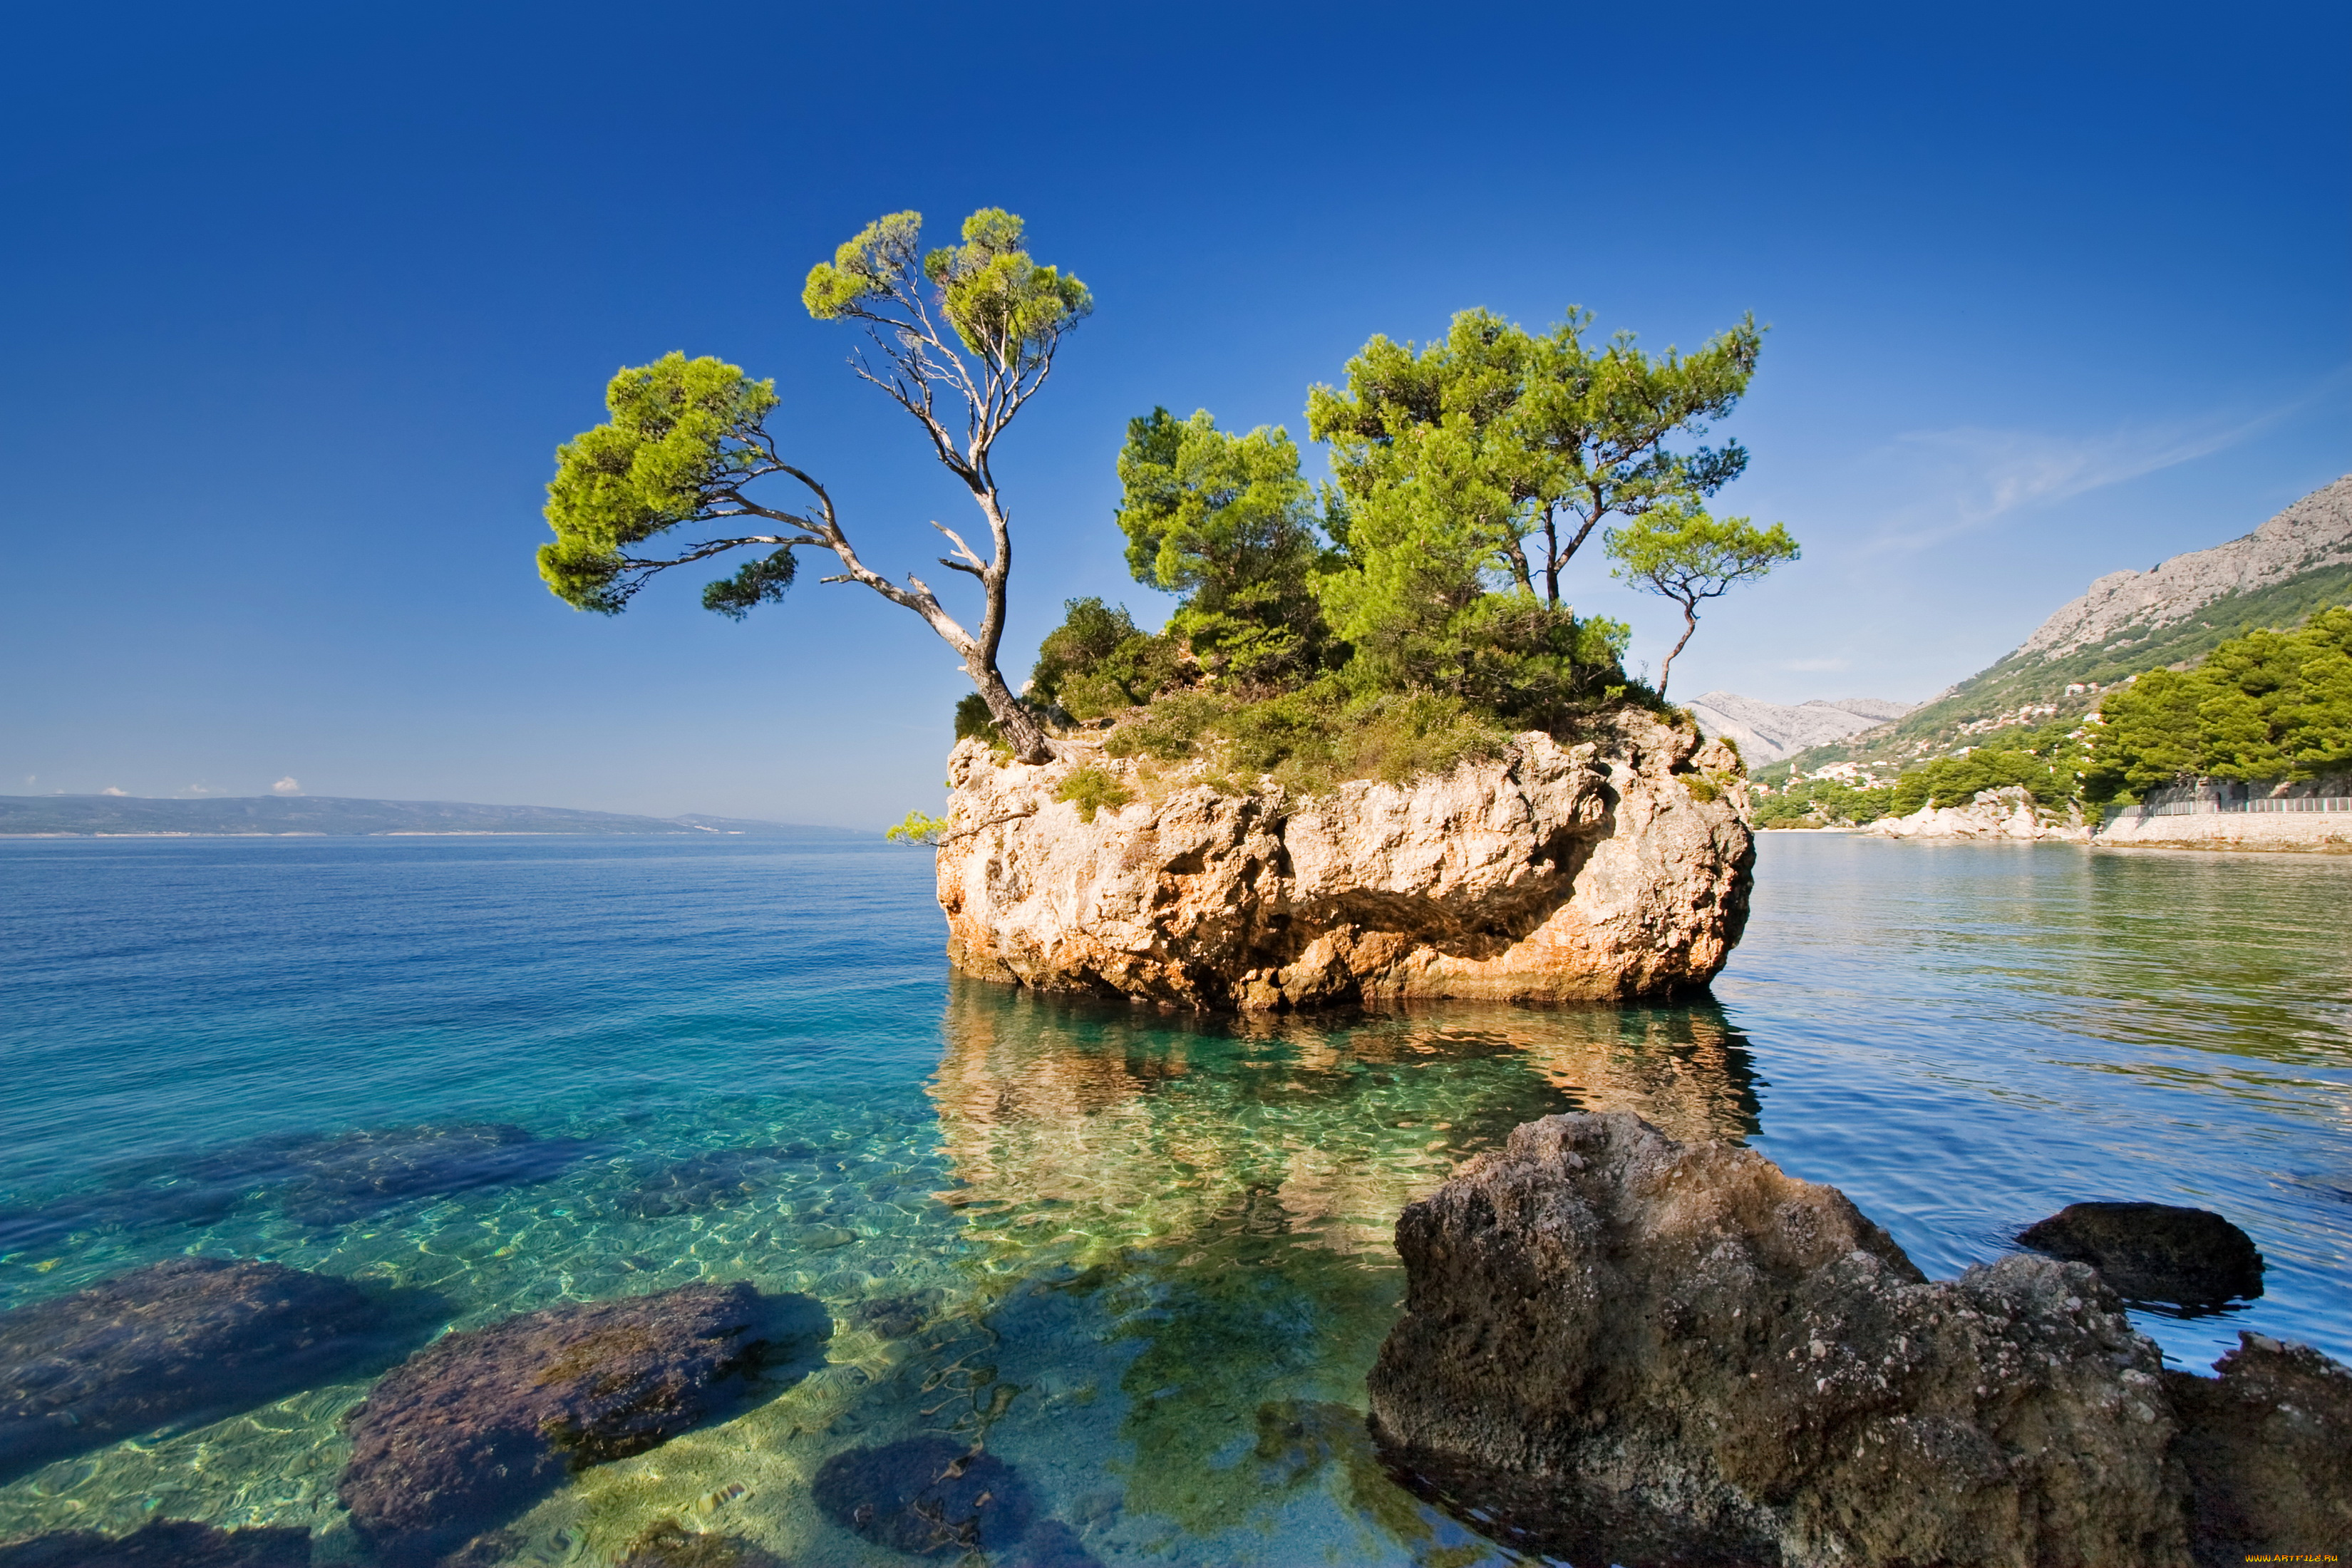 хорватия, природа, побережье, море, камни, дерево, скала